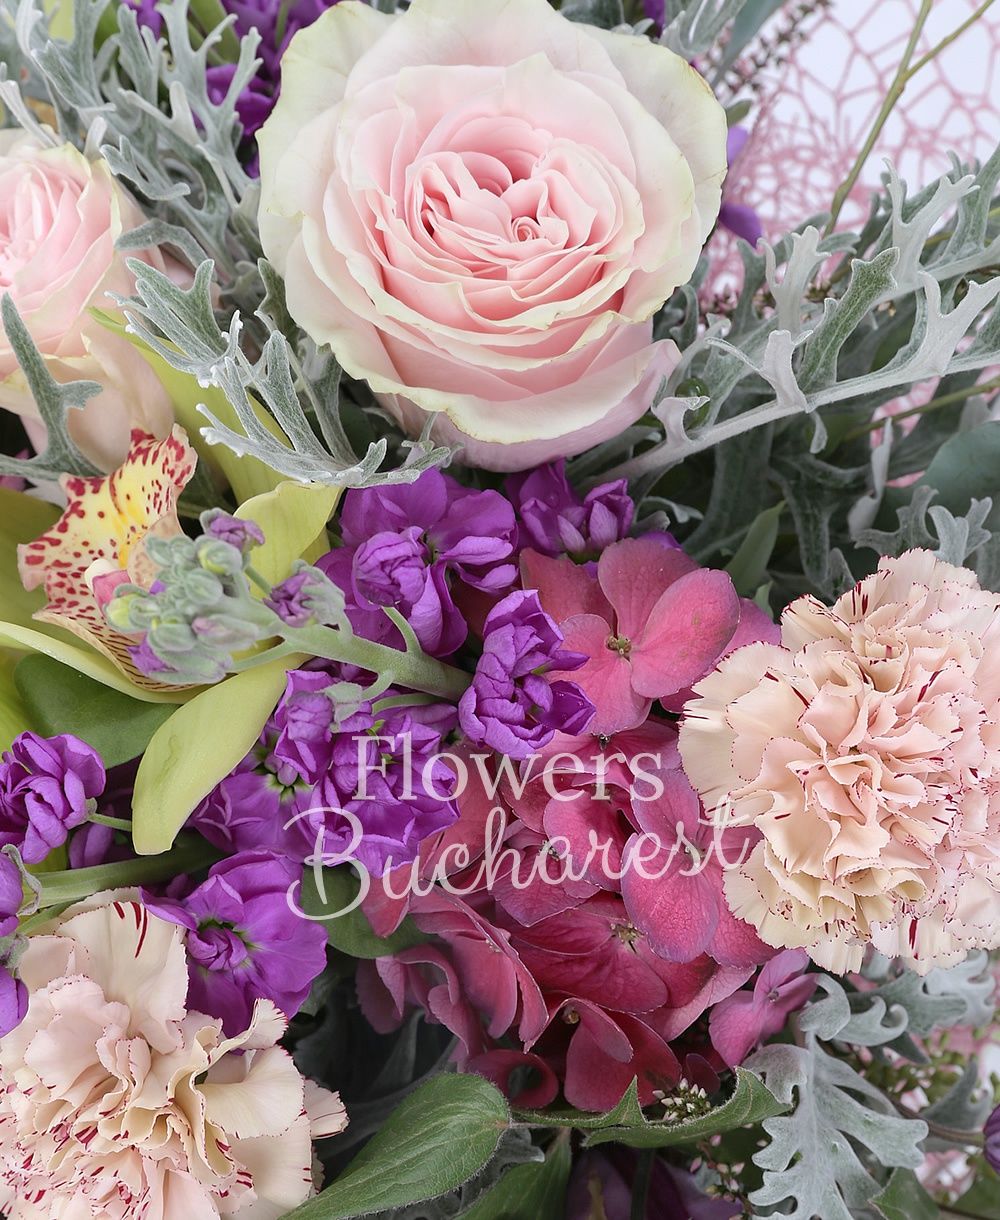 5 pink roses, 5 purple mathiolla, 5 garnet hydrangea, 5 carnations, 3 clematis, green cymbidium, greenery